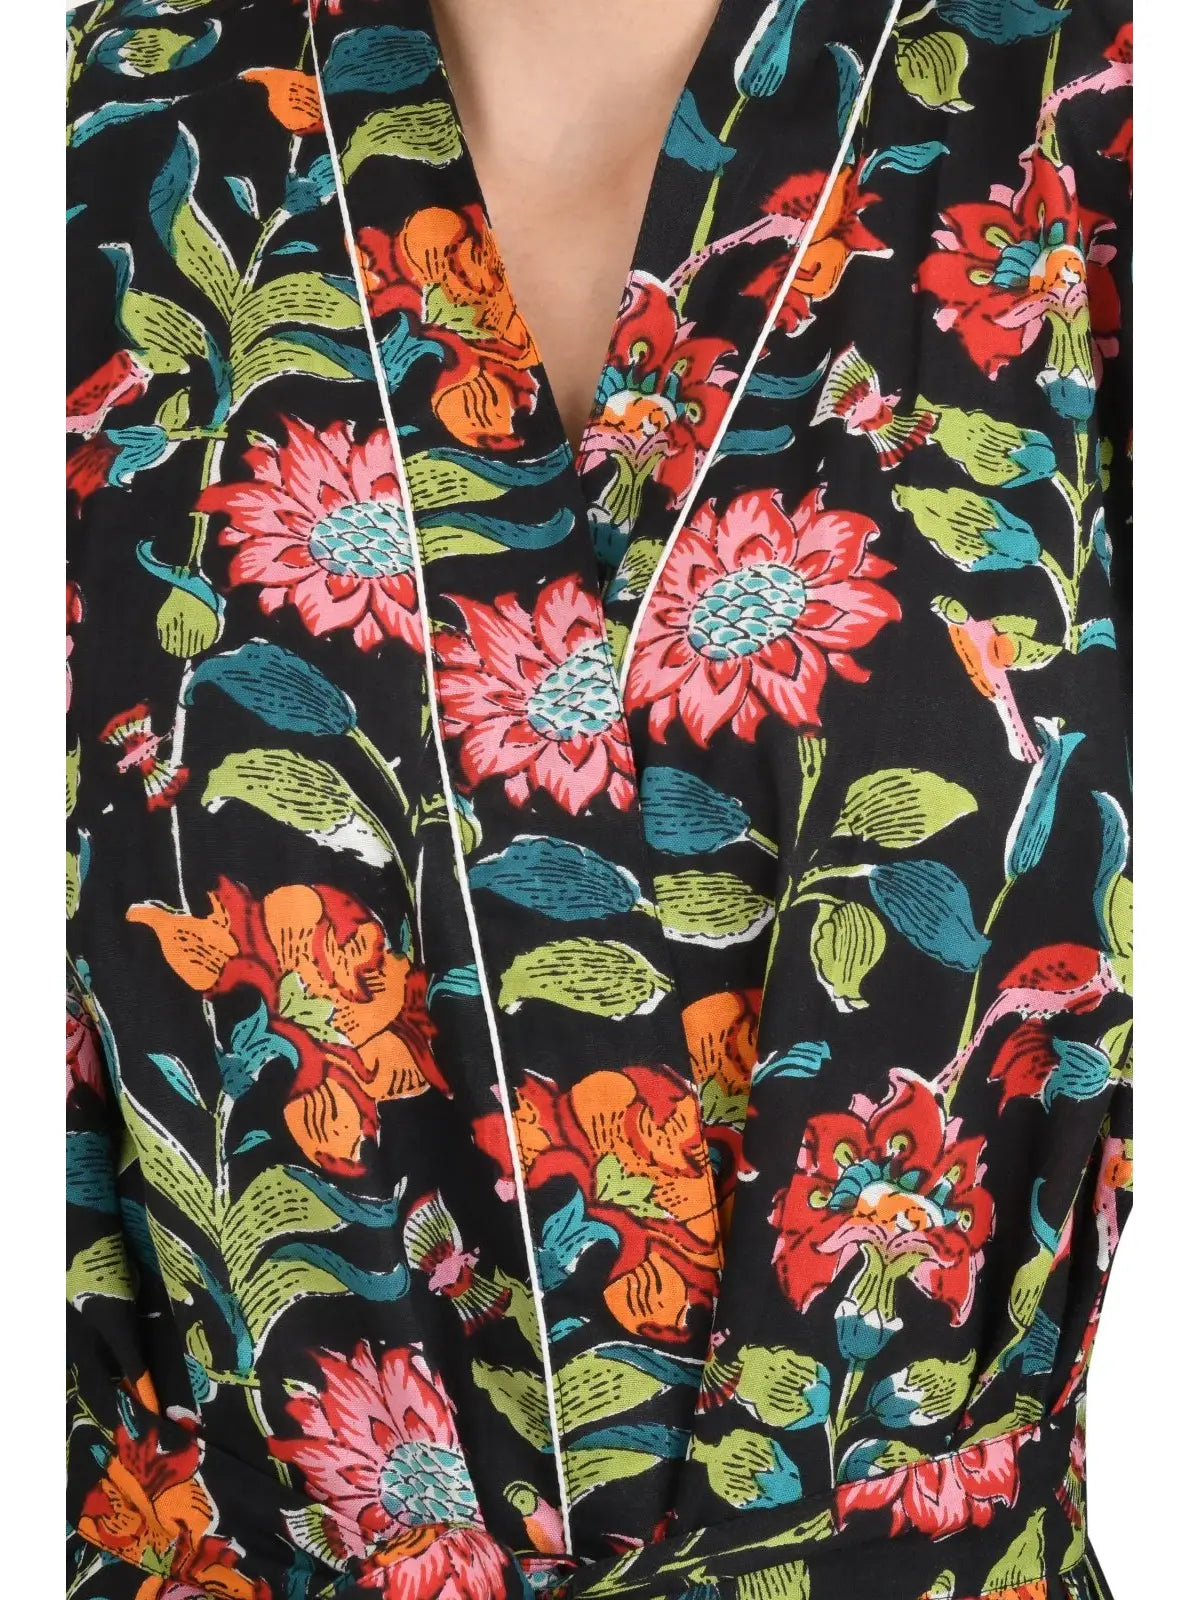 Boho Cotton Kimono House Robe Indian Handprinted Floral Botanical Garden Print Pattern | Lightweight Summer Luxury Beach Holidays Yacht Cover Up Stunning Dress